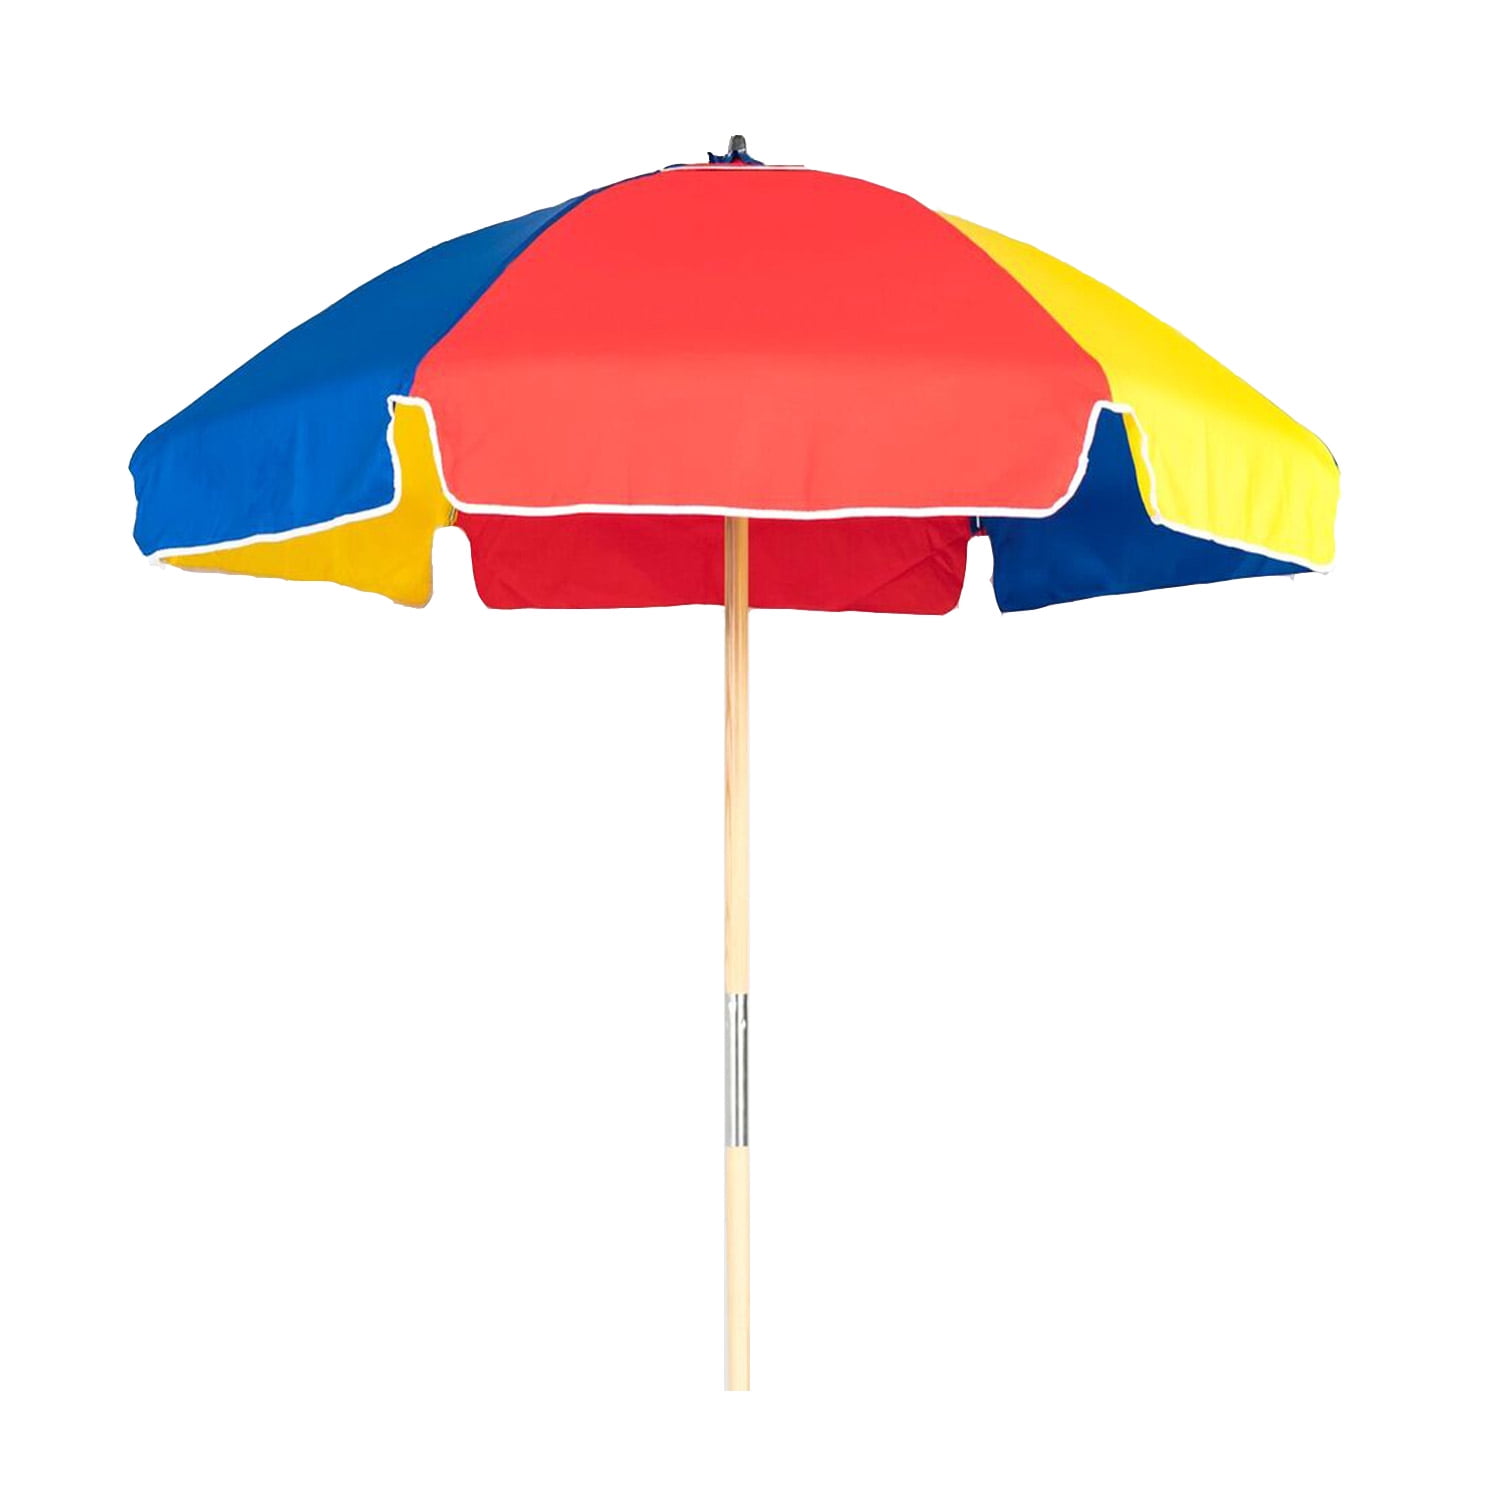 Minimalist Heavy Duty Beach Chair With Umbrella for Simple Design